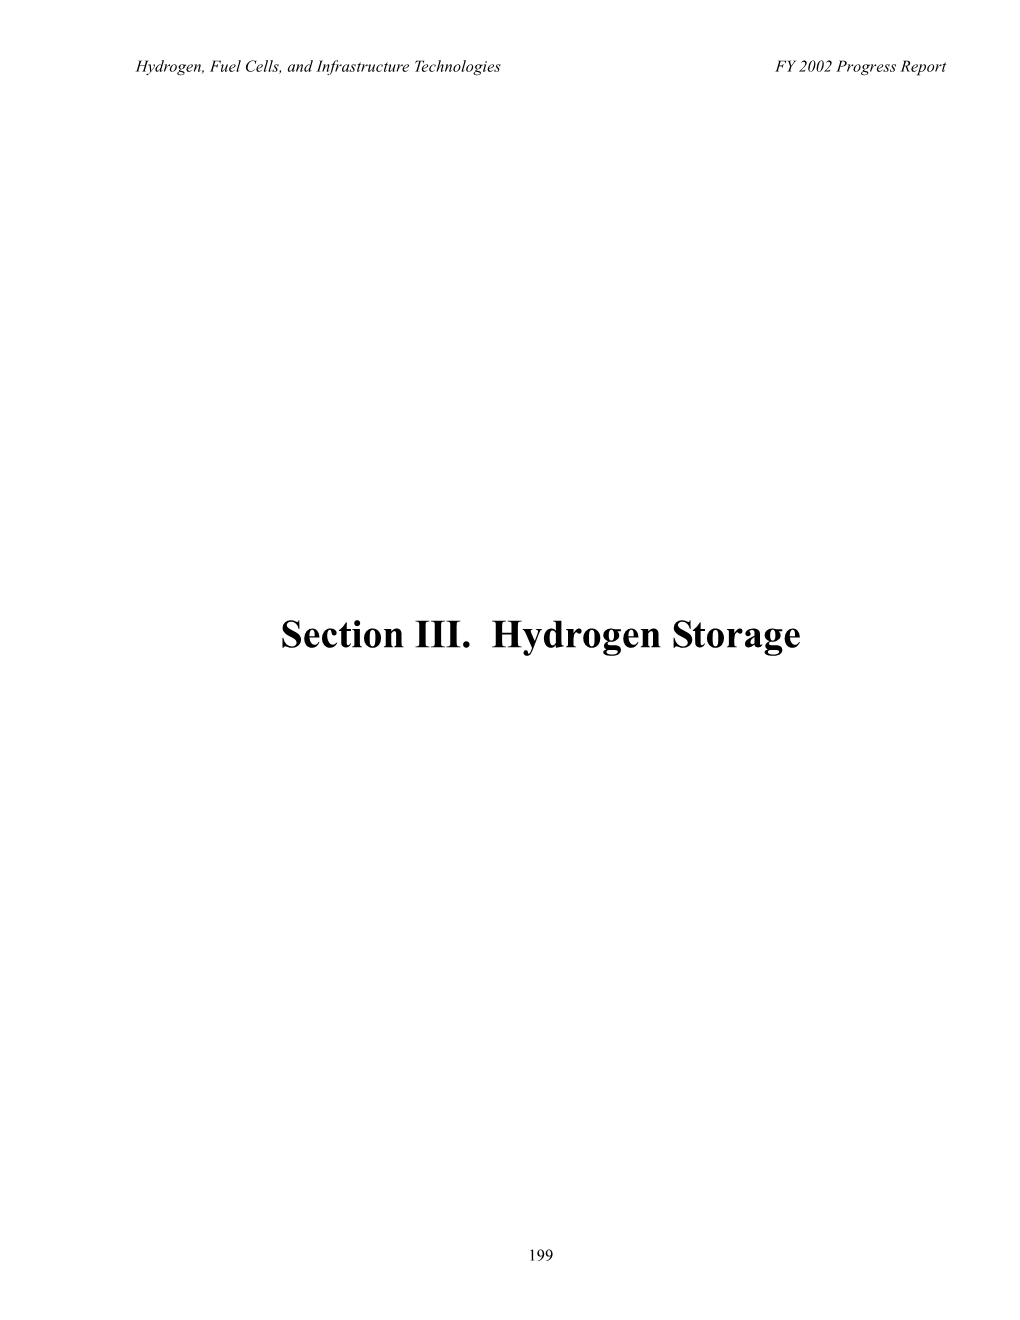 Hydrogen, Fuel Cells and Infrastructure Technologies Program: 2002 Annual Progress Report